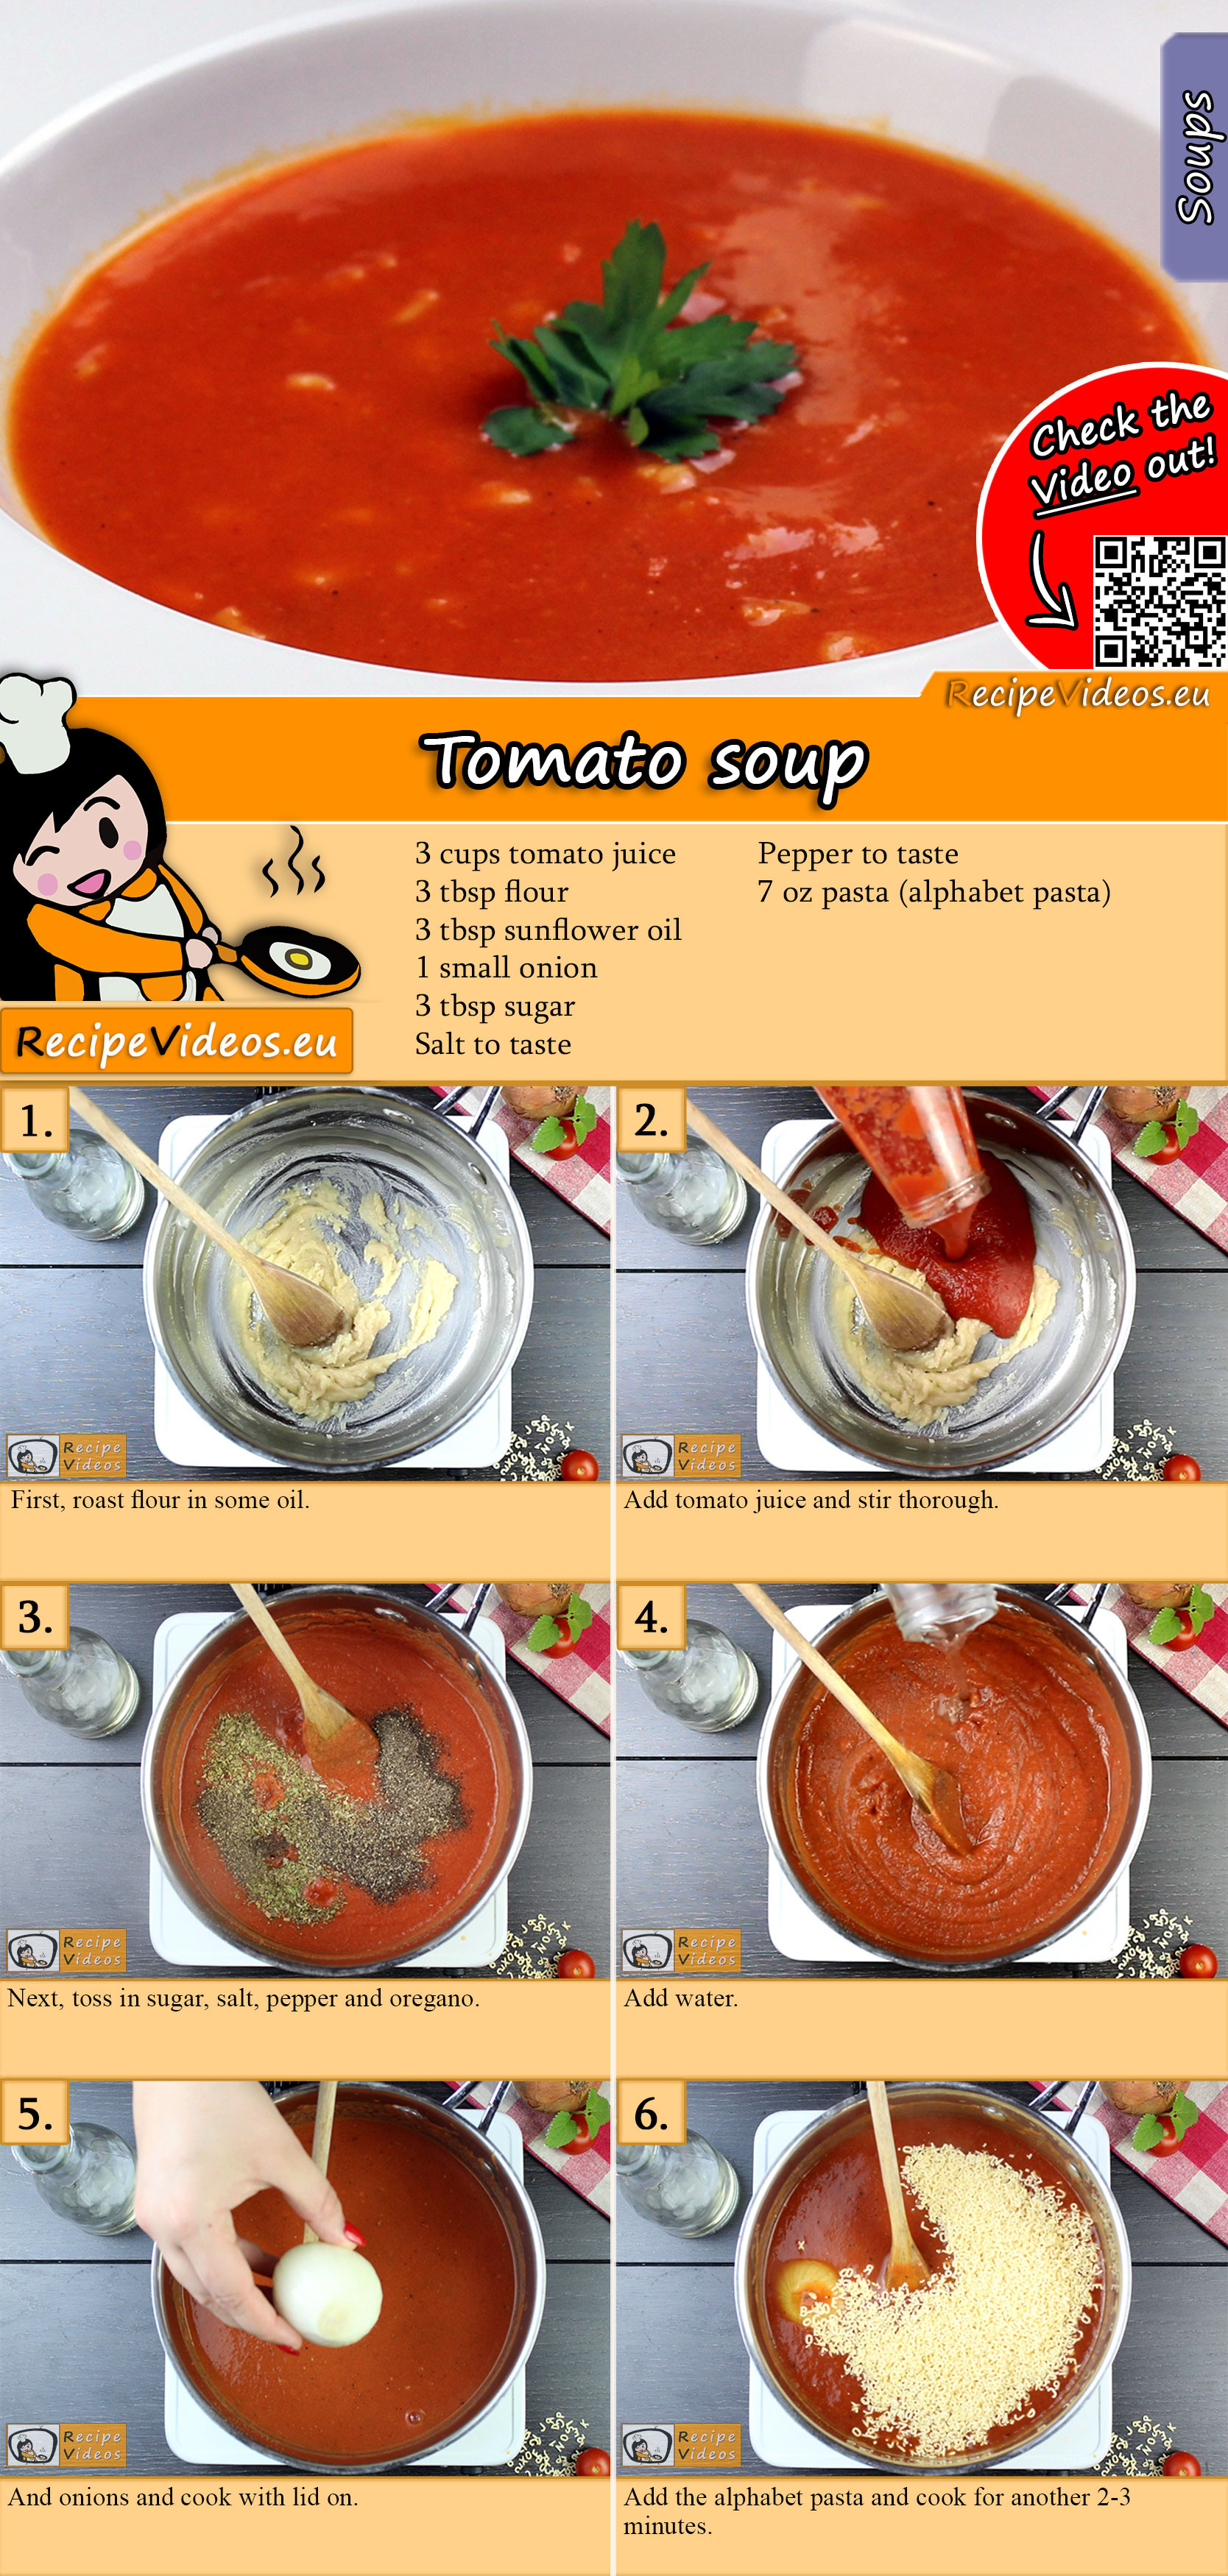 Tomato soup recipe with video